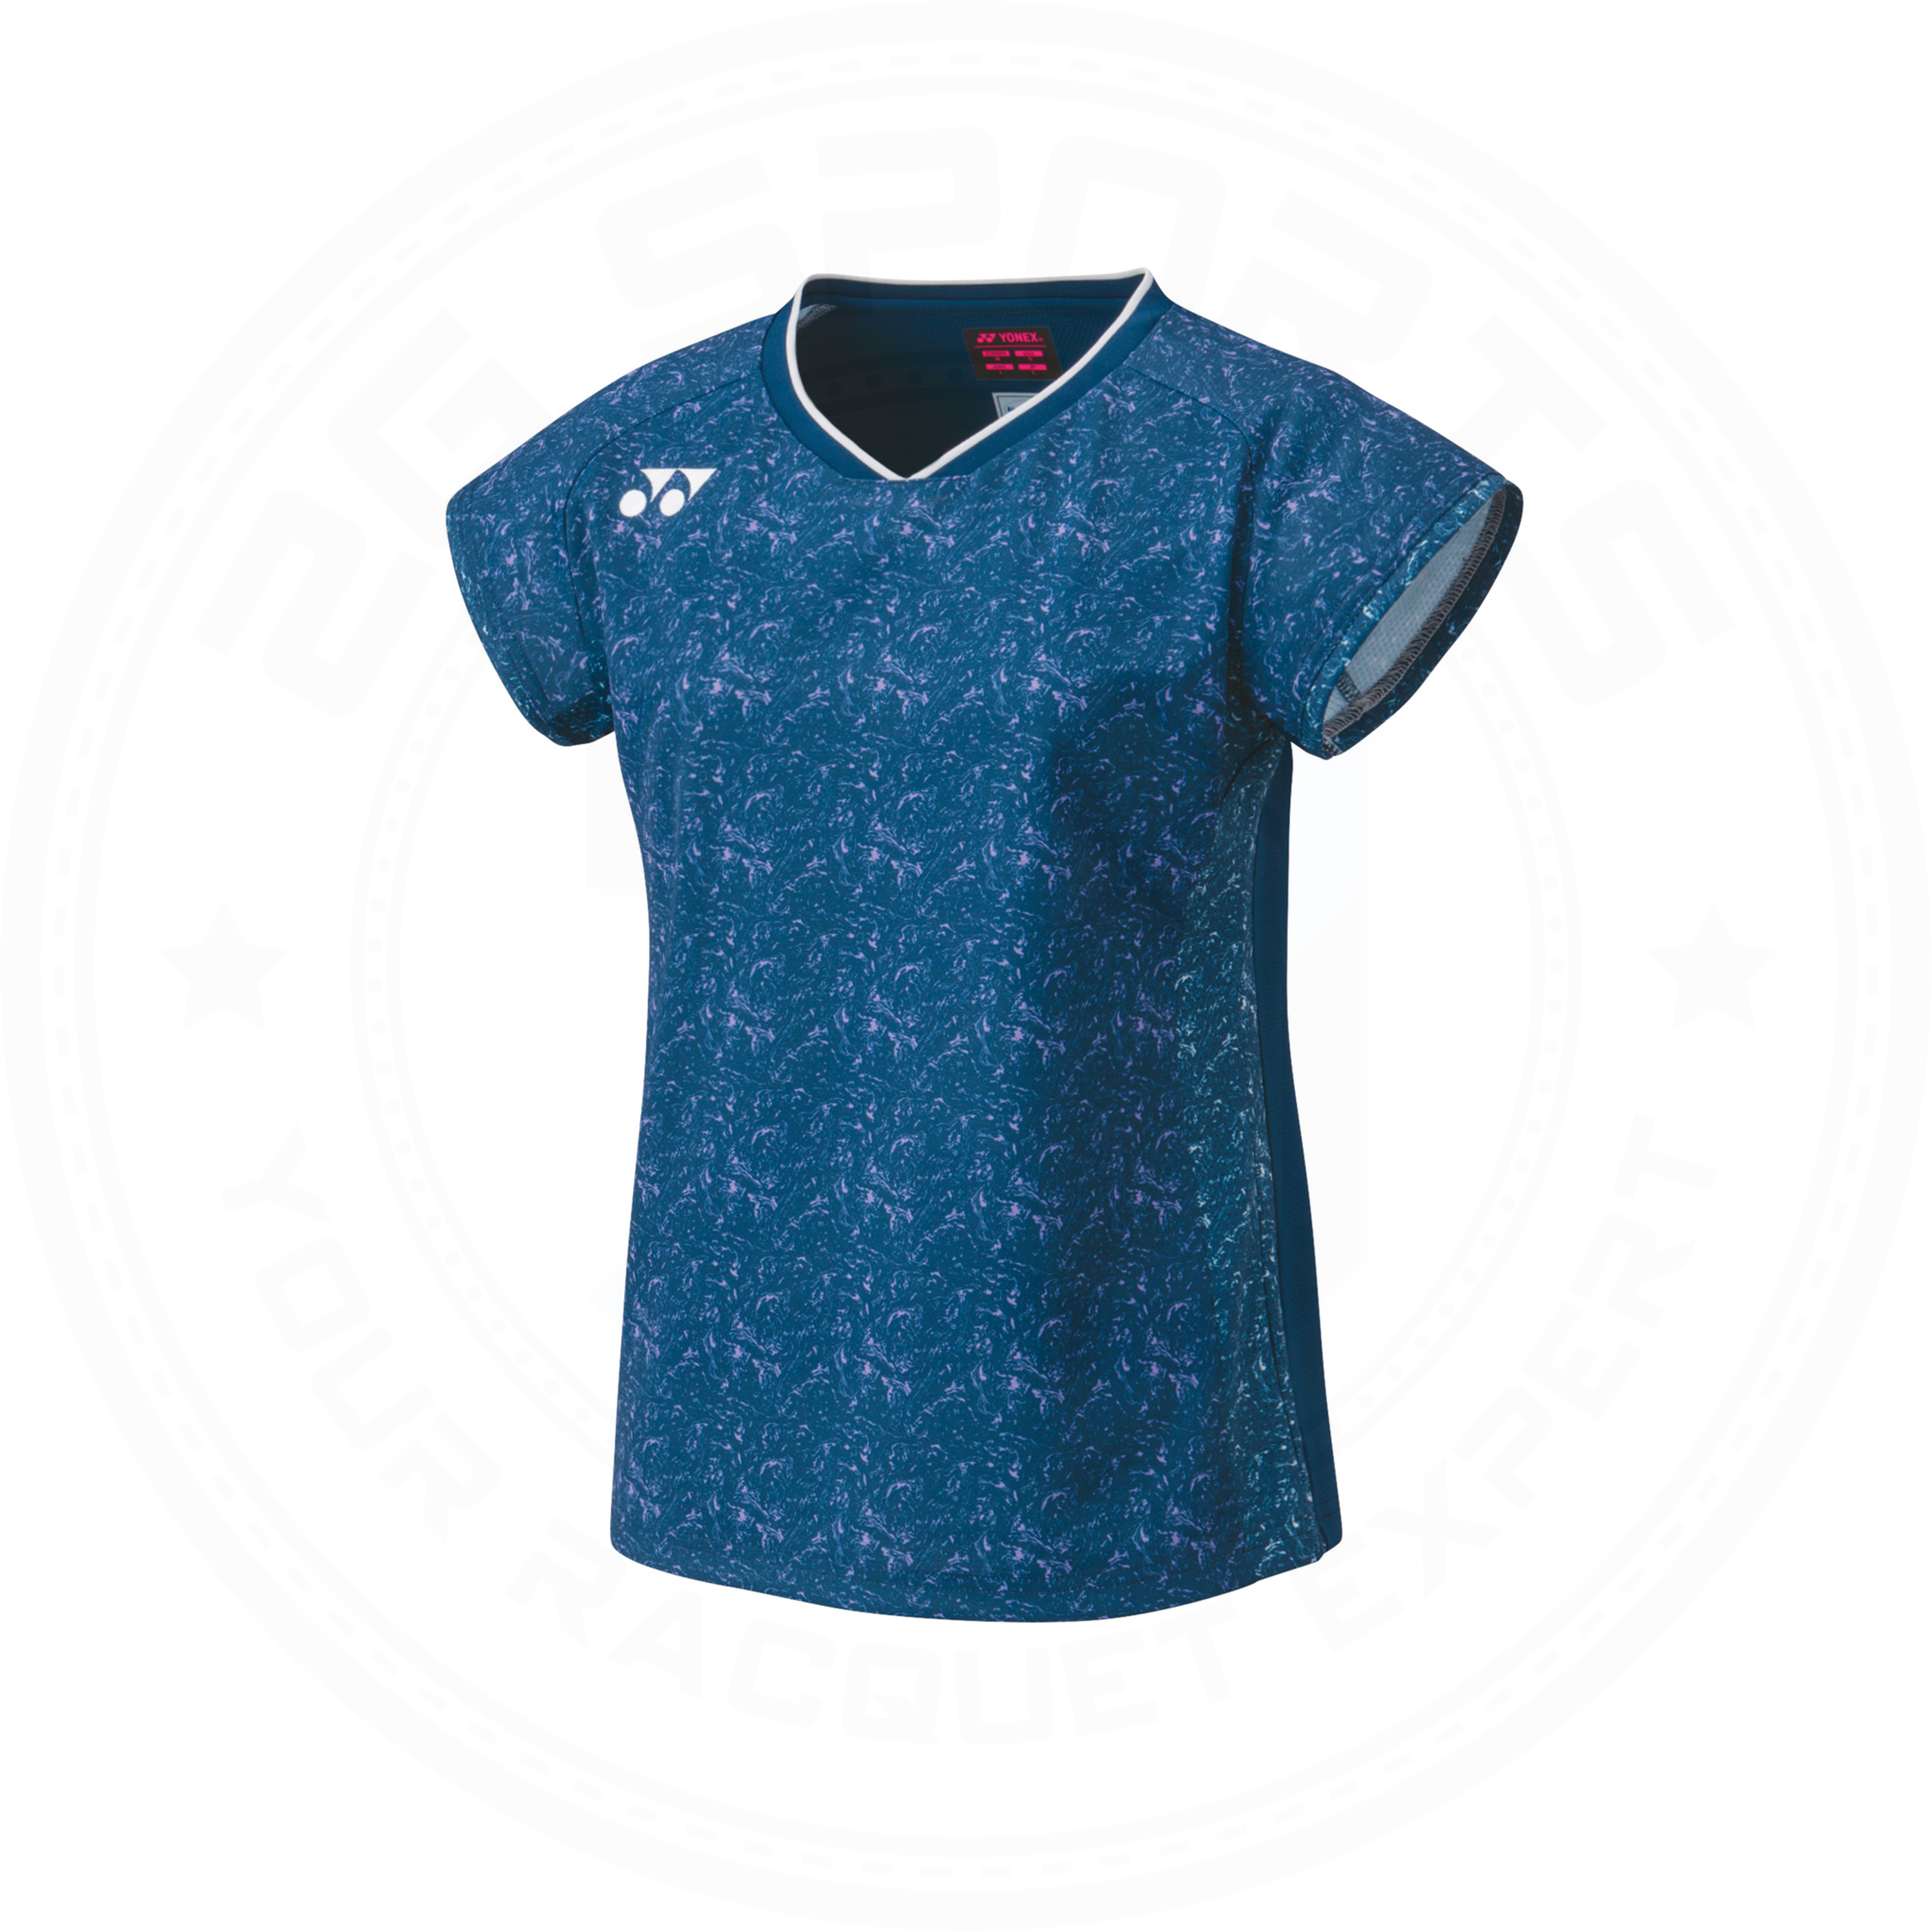 Yonex Premium Badminton/Sports Shirt 20690EX Navy/ Blue purple WOMEN'S (Clearance)